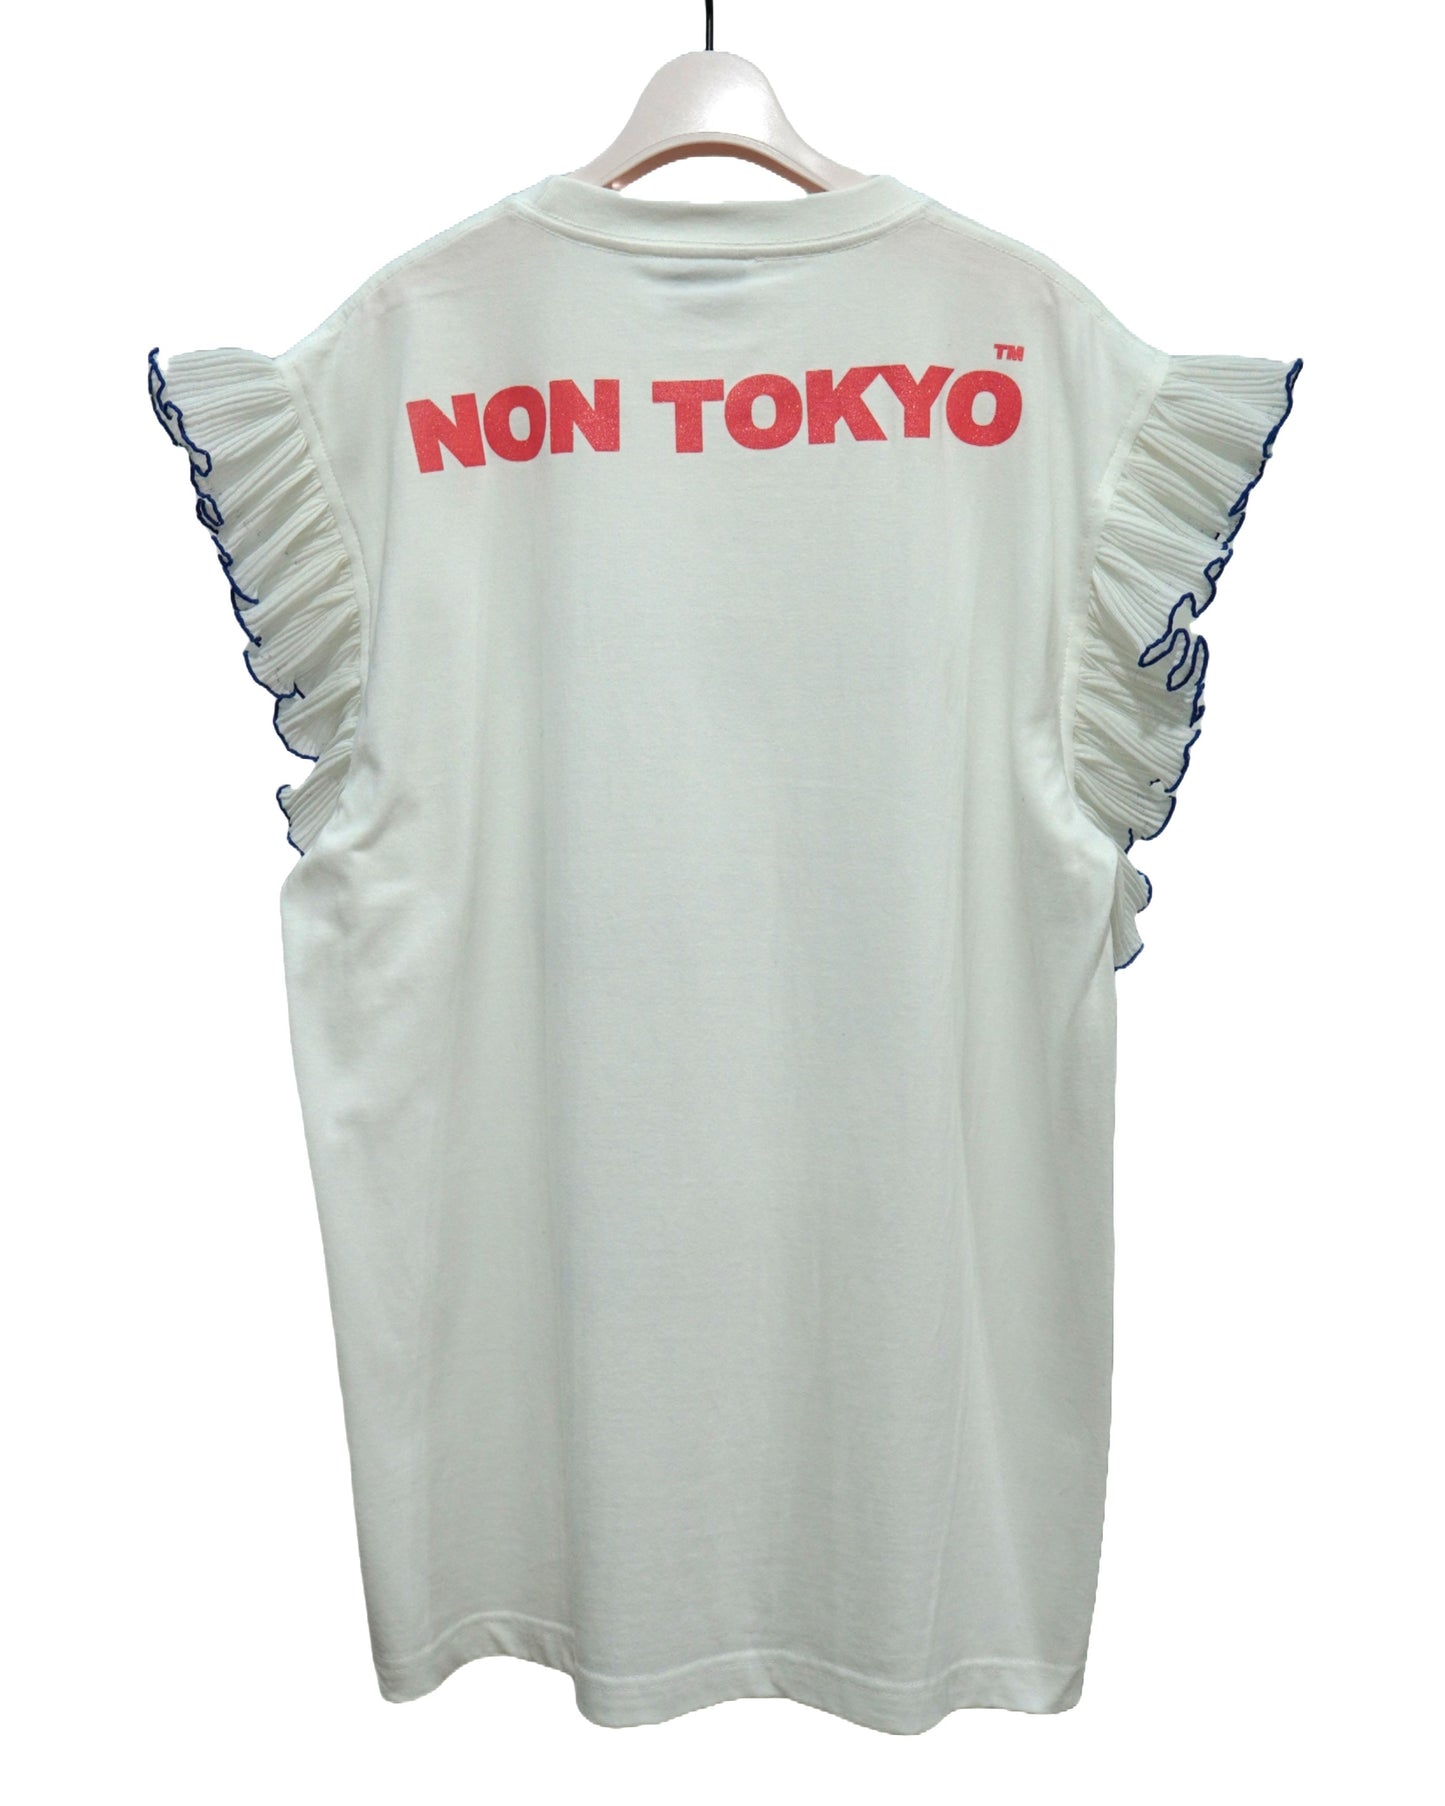 NON TOKYO /  FRILL SLEEVE T-SHIRT (WHITE) / 〈ノントーキョー〉フリルスリーブTシャツ (ホワイト)